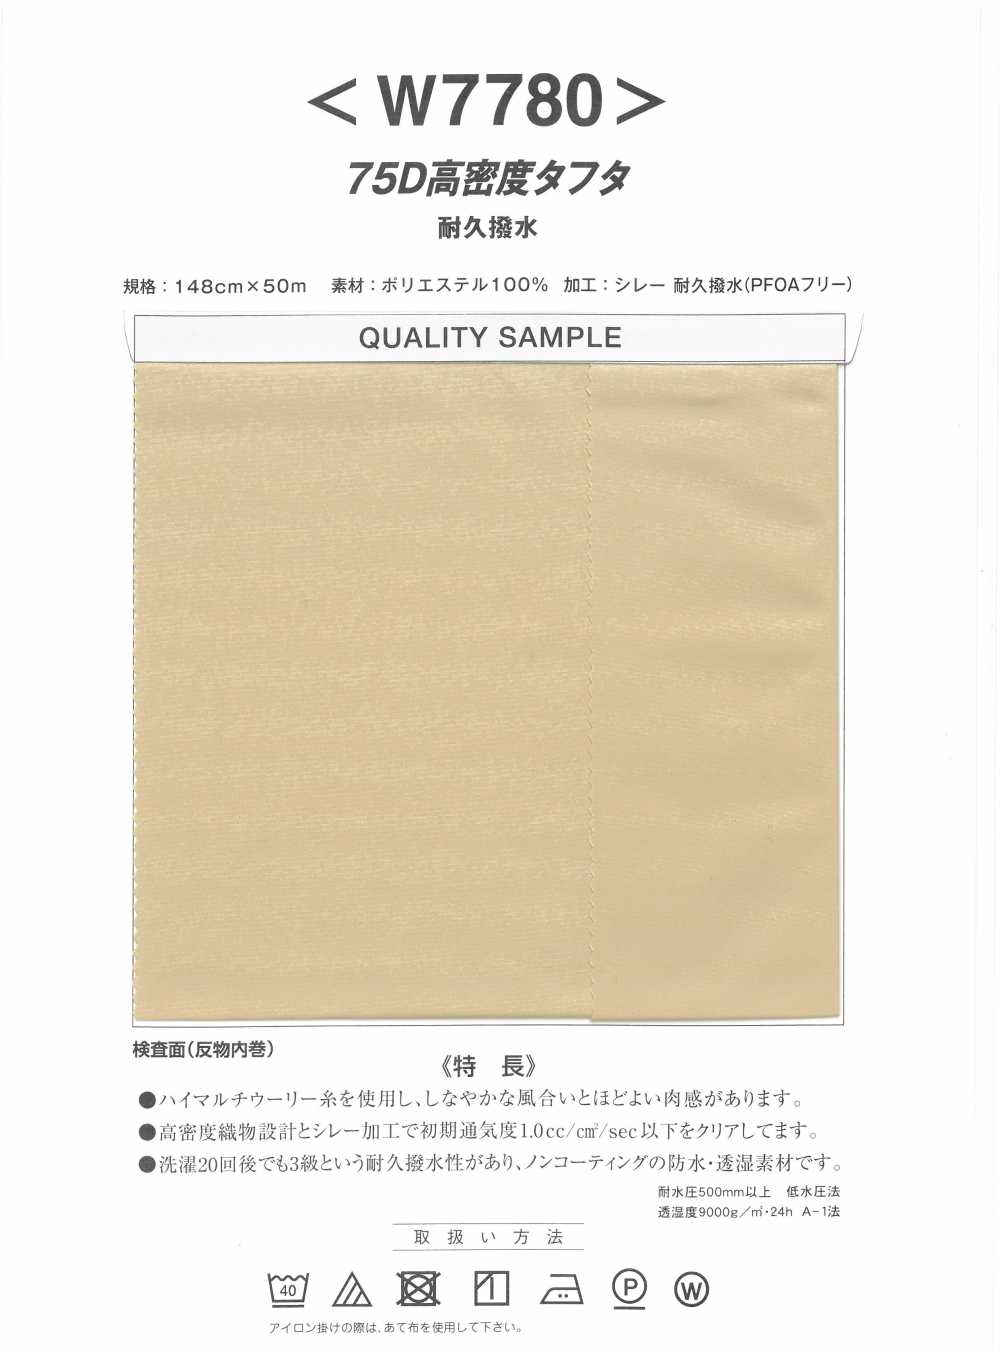 W7780 75D High Density Taffeta[Textile / Fabric] Nishiyama